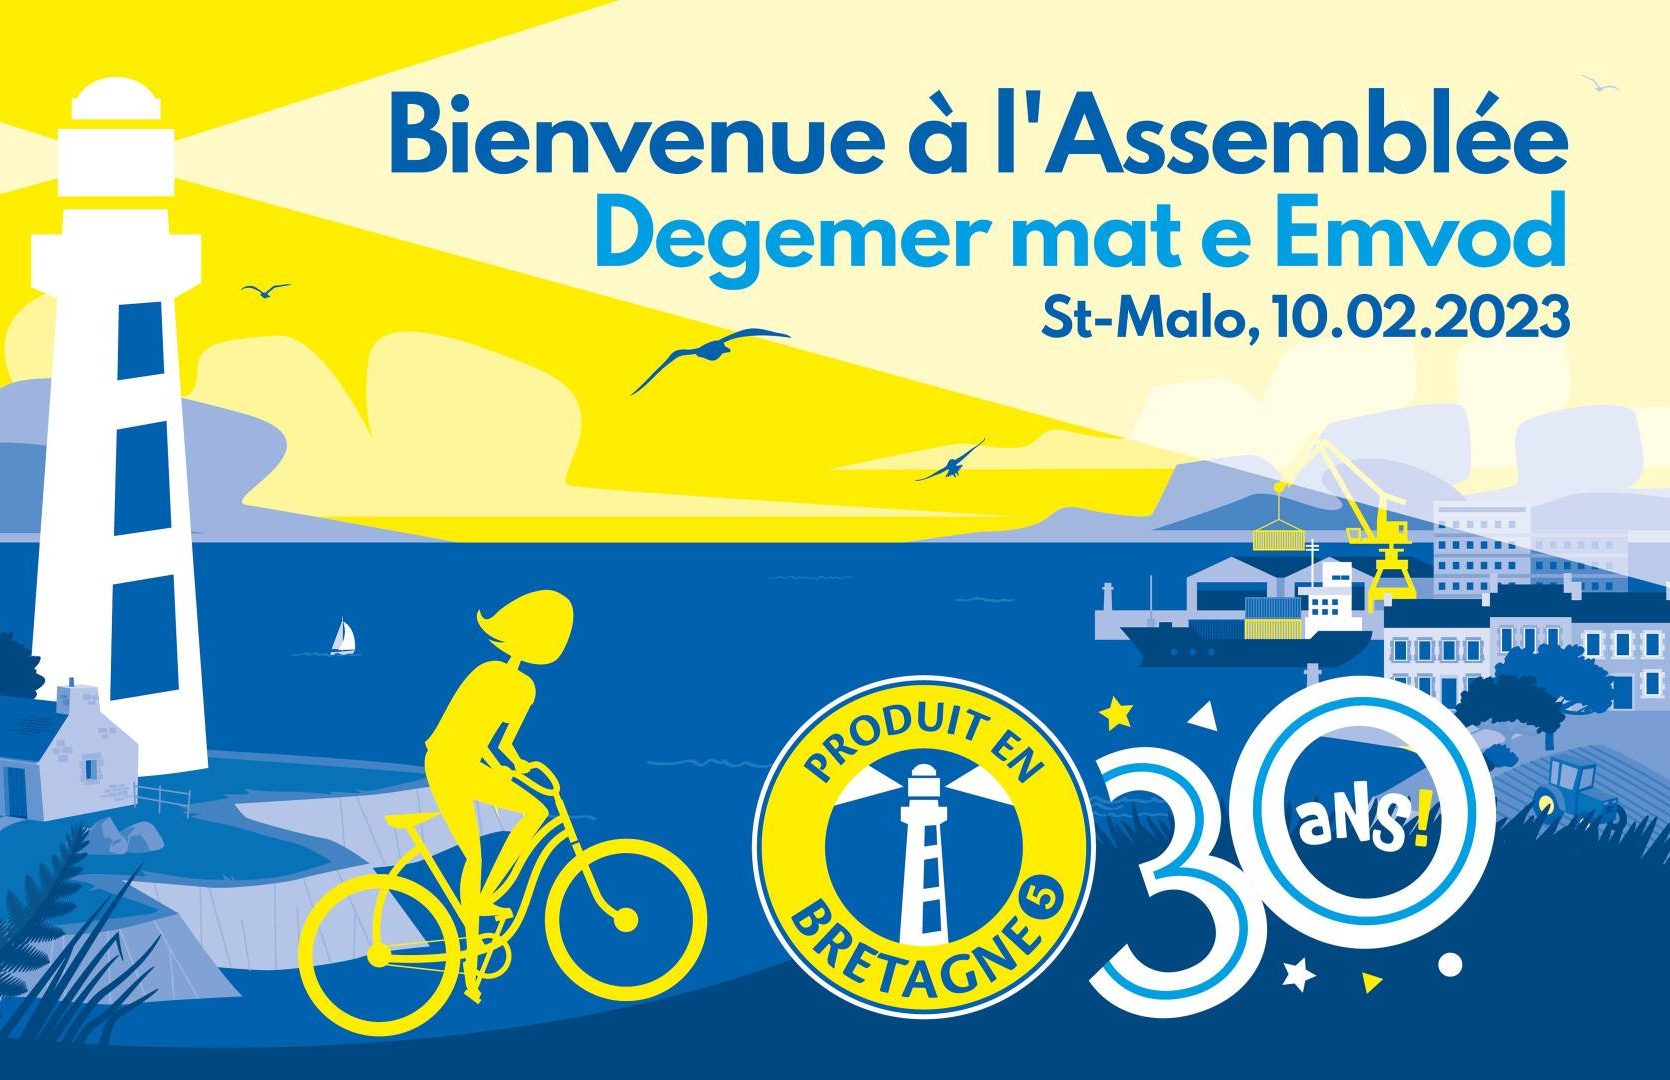 30th General Assembly Produit en Bretagne - February 9 and 10, 2023